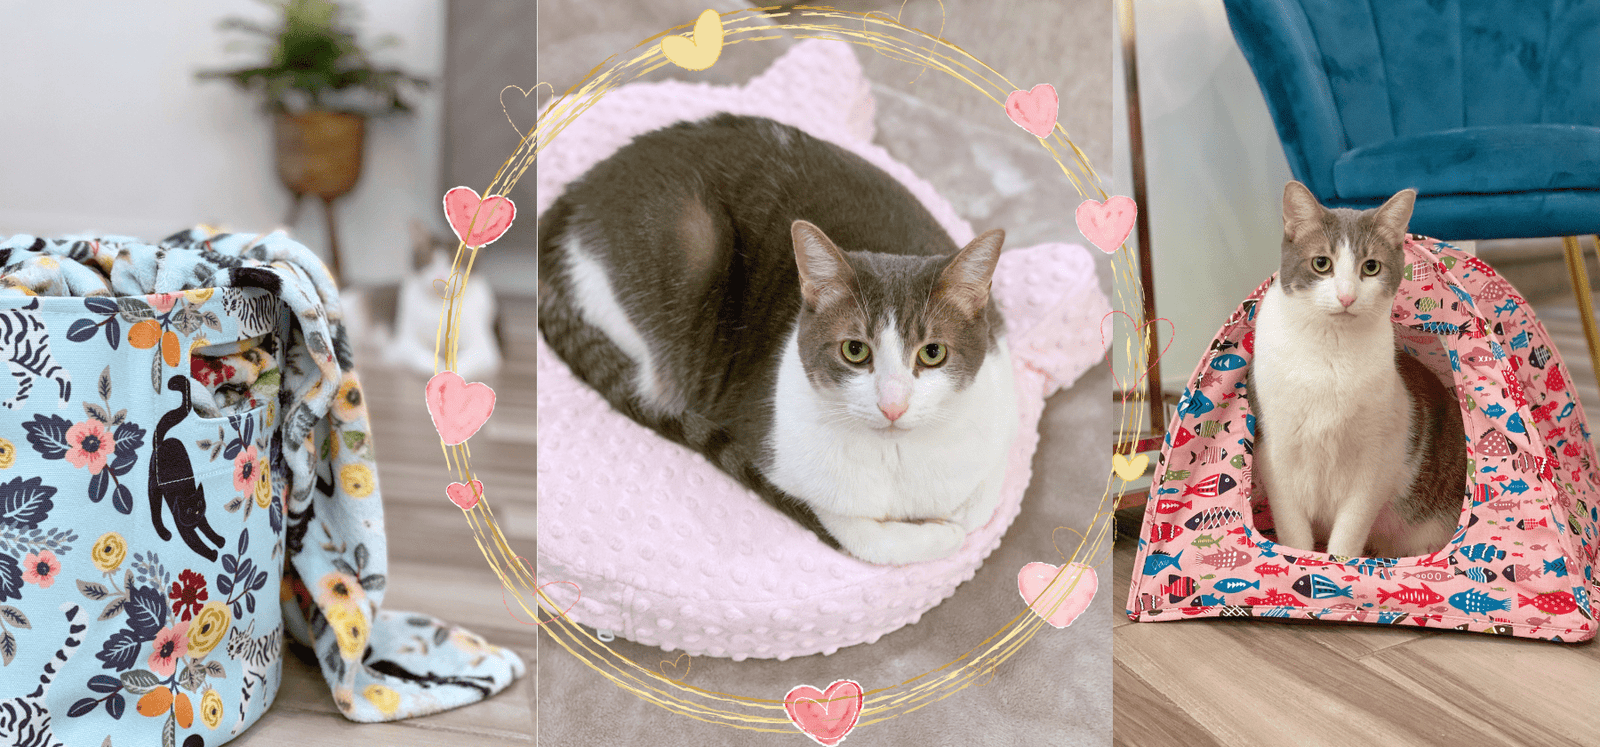 Squished Cat Socks – Cat Warehouse